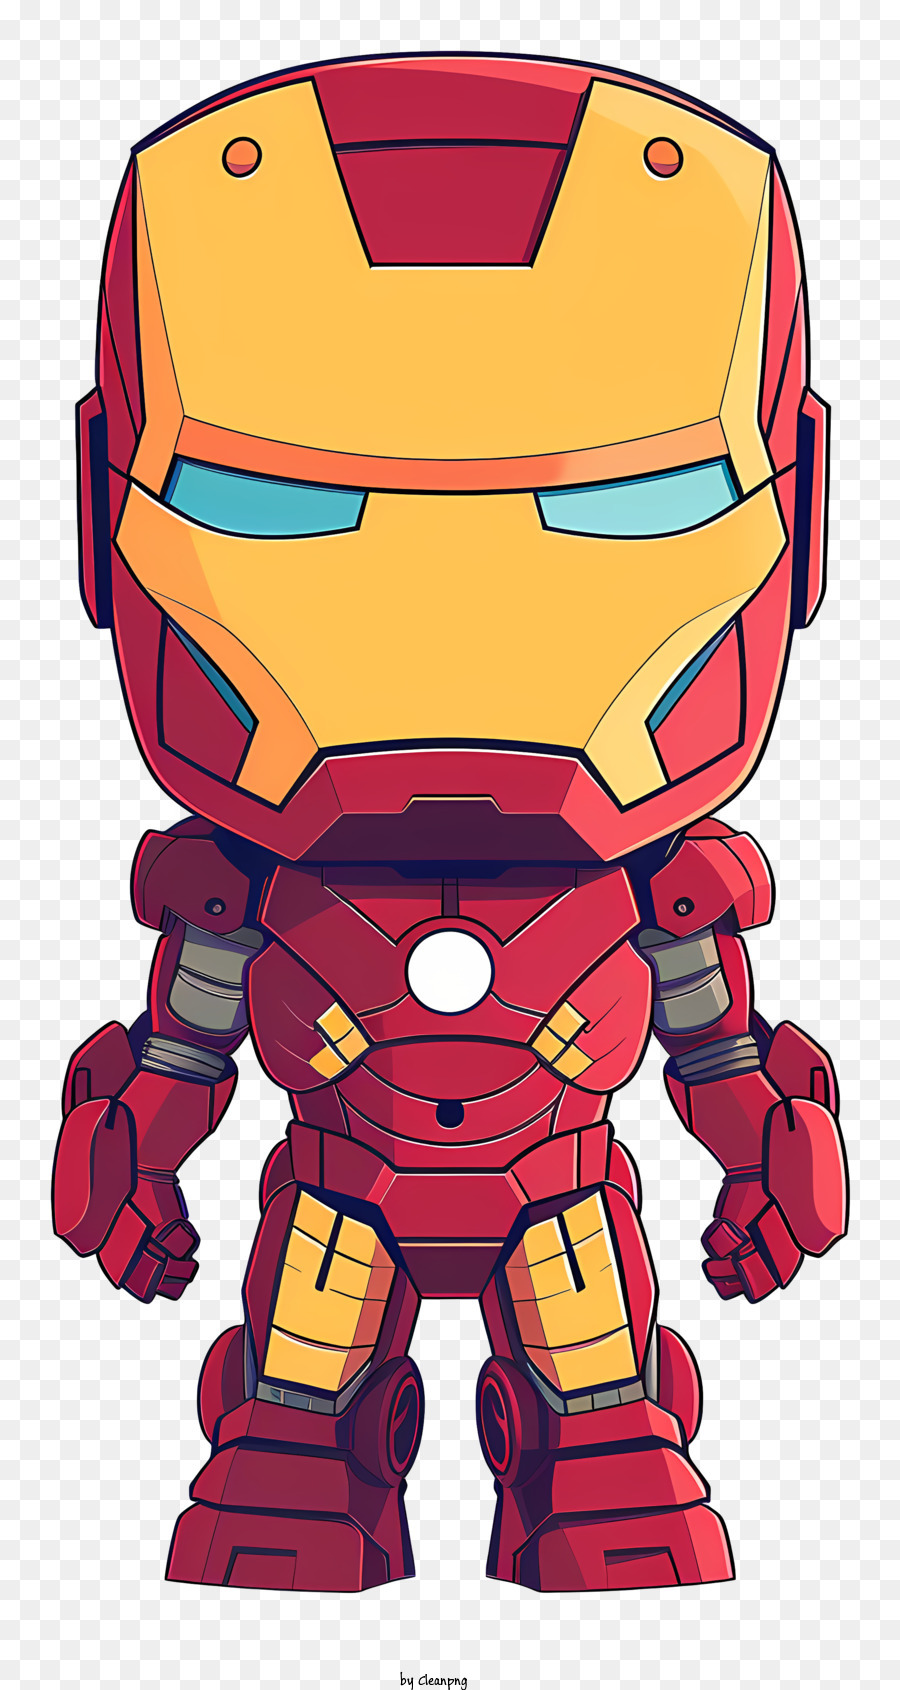 Descarga gratuita de Iron Man, Marvel Comics, Superhéroe Imágen de Png